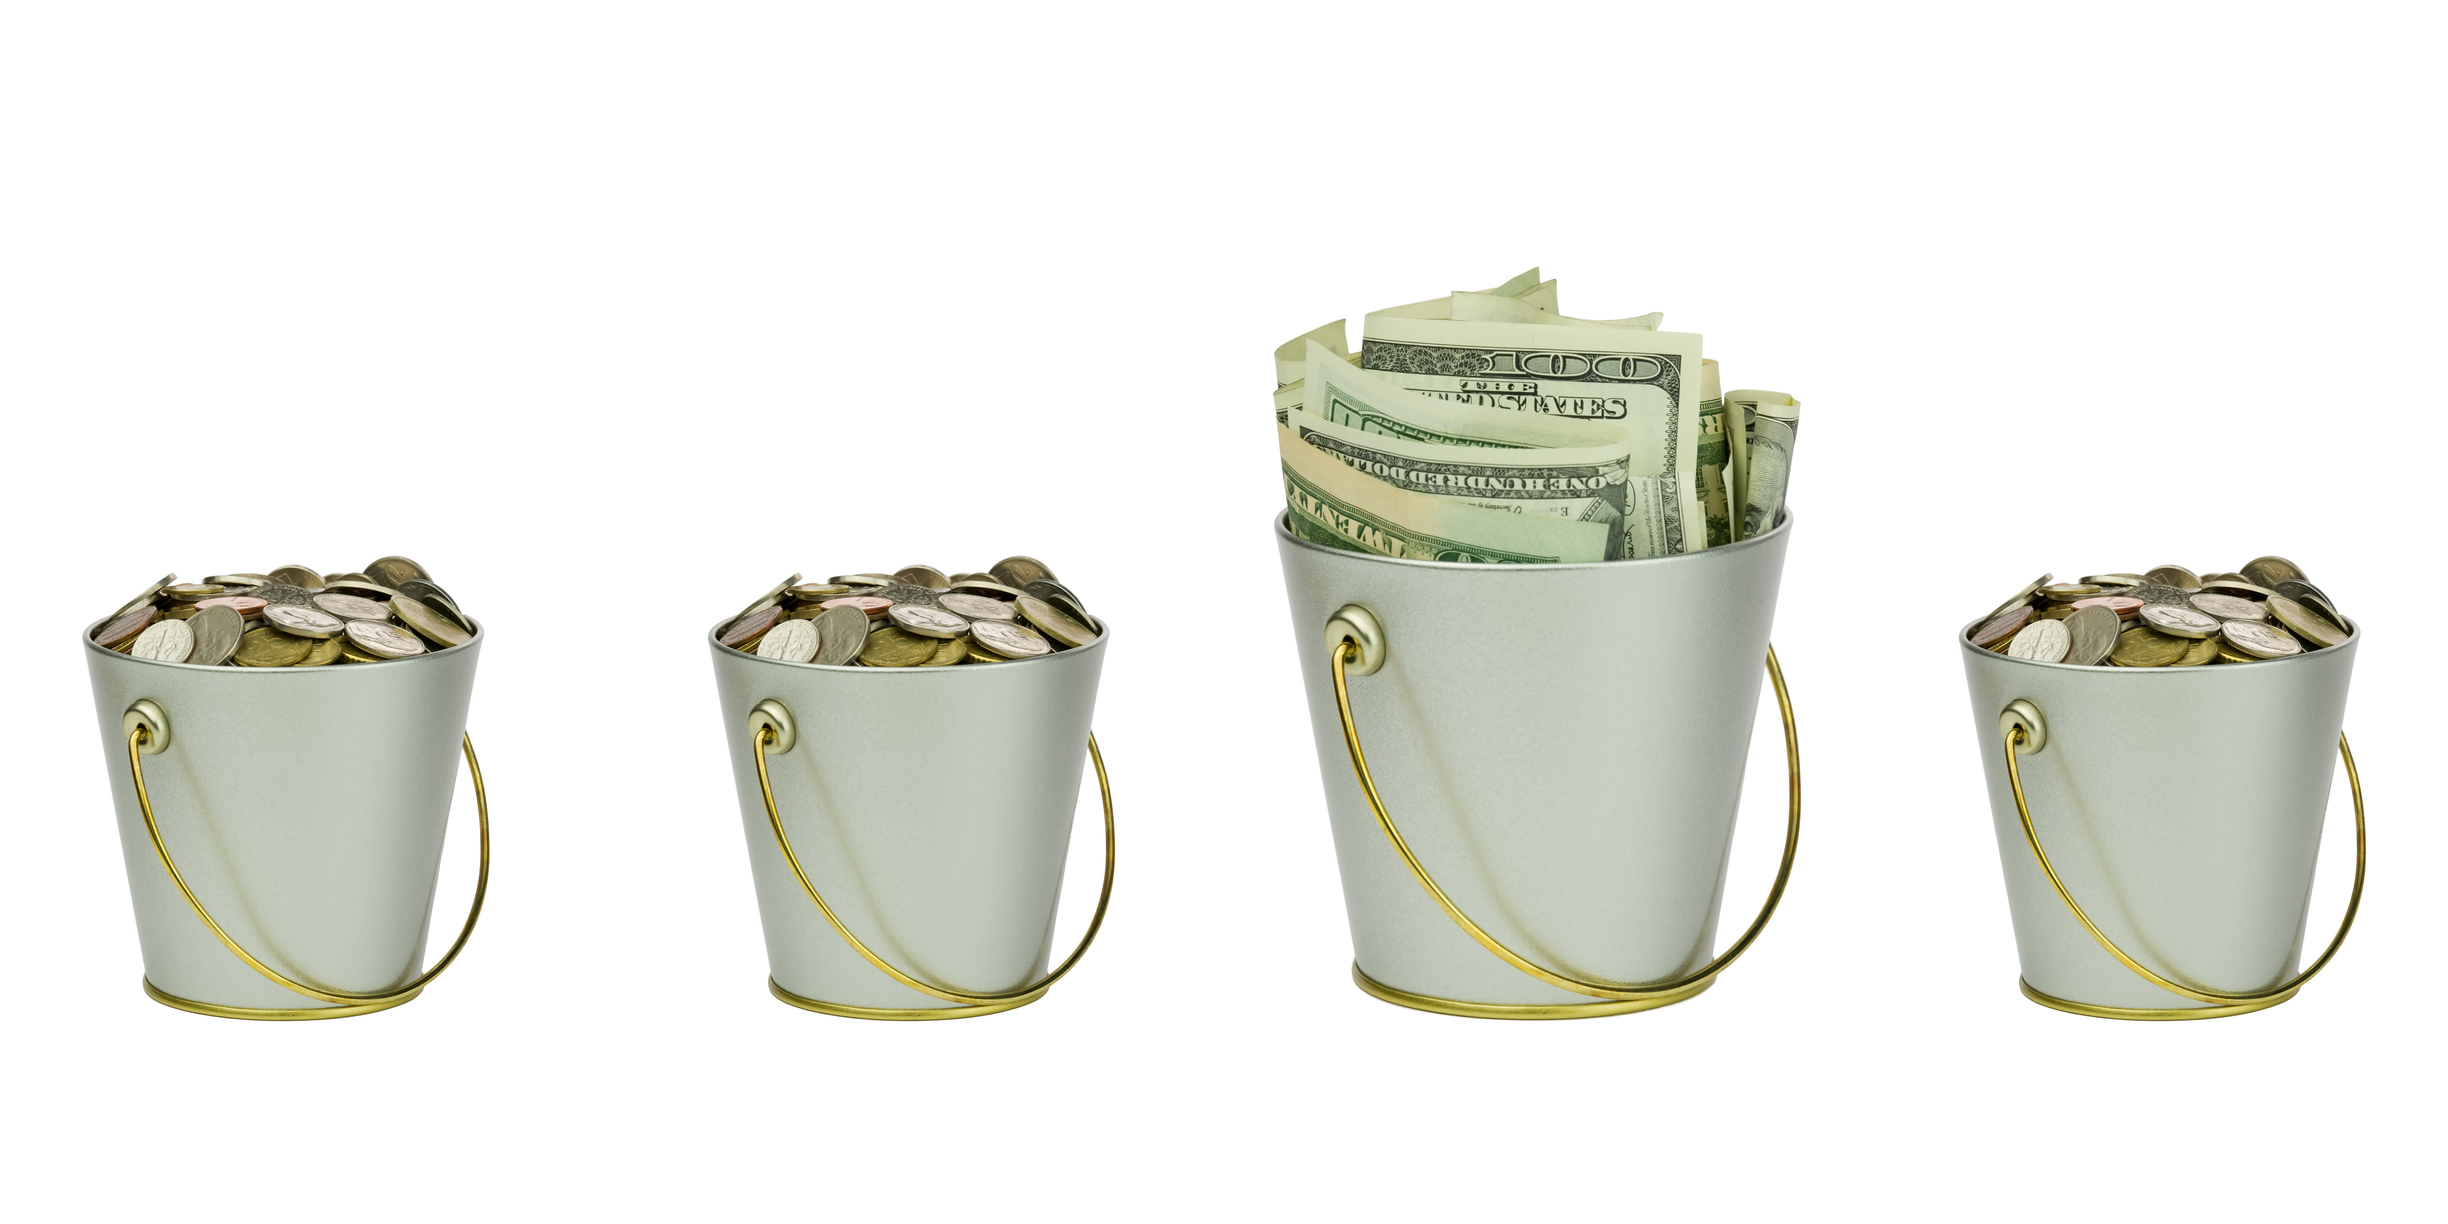 Savings Buckets - Complete Controller